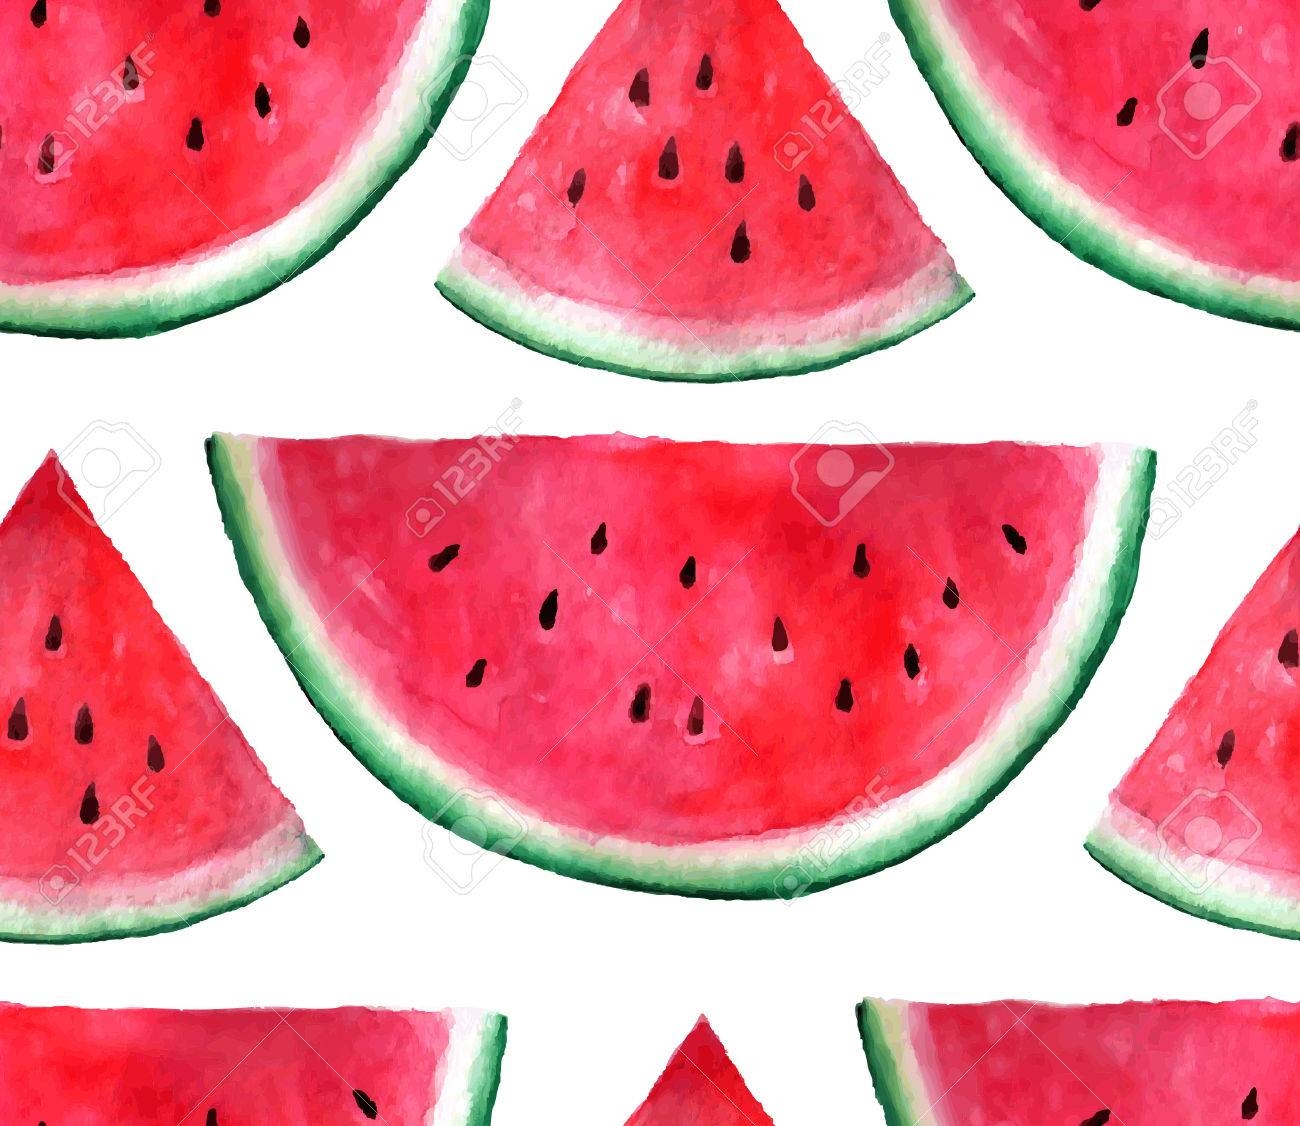 Watermelon69_